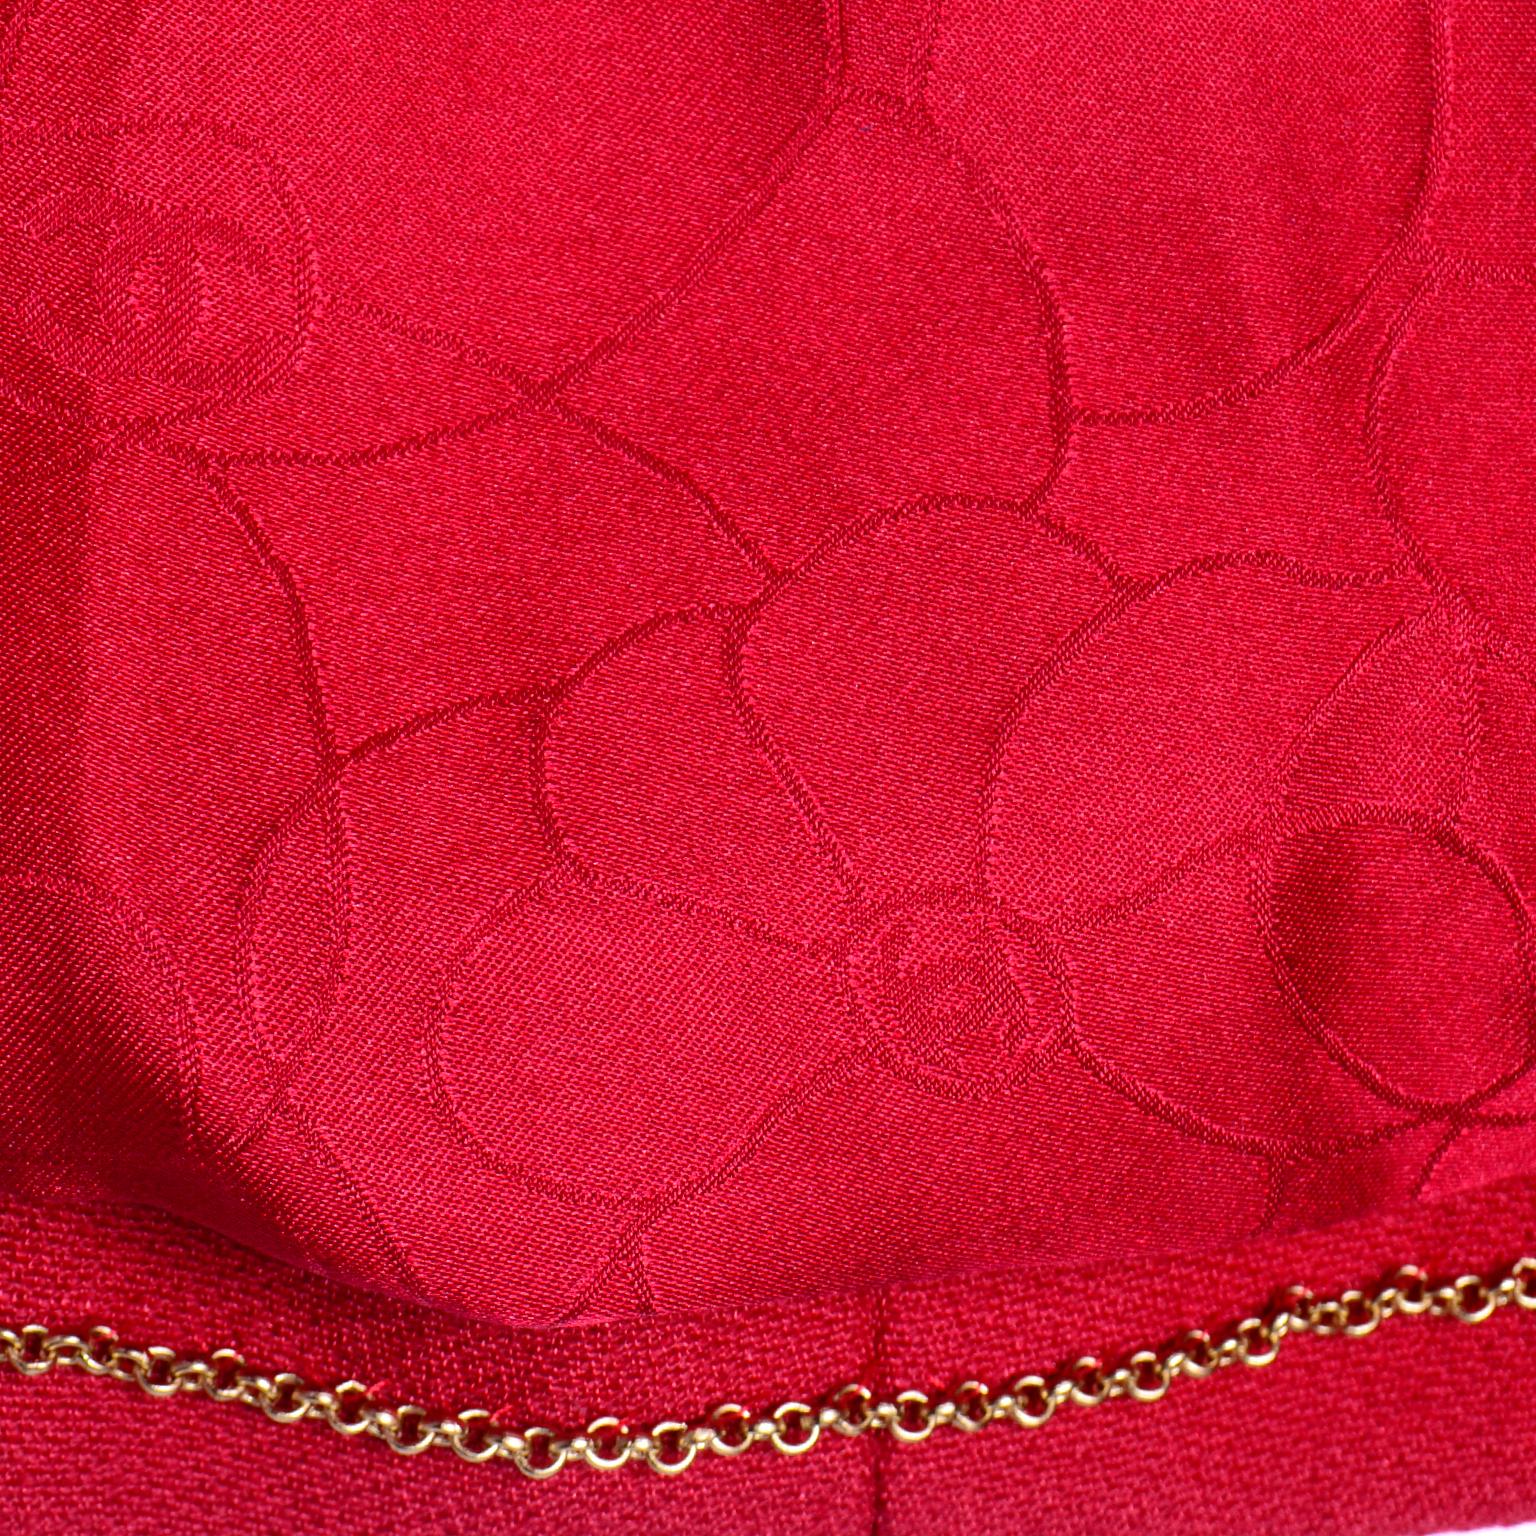 2001 Red Wool Blend Chanel Blazer Jacket W Notch Collar and CC Button Closure 5